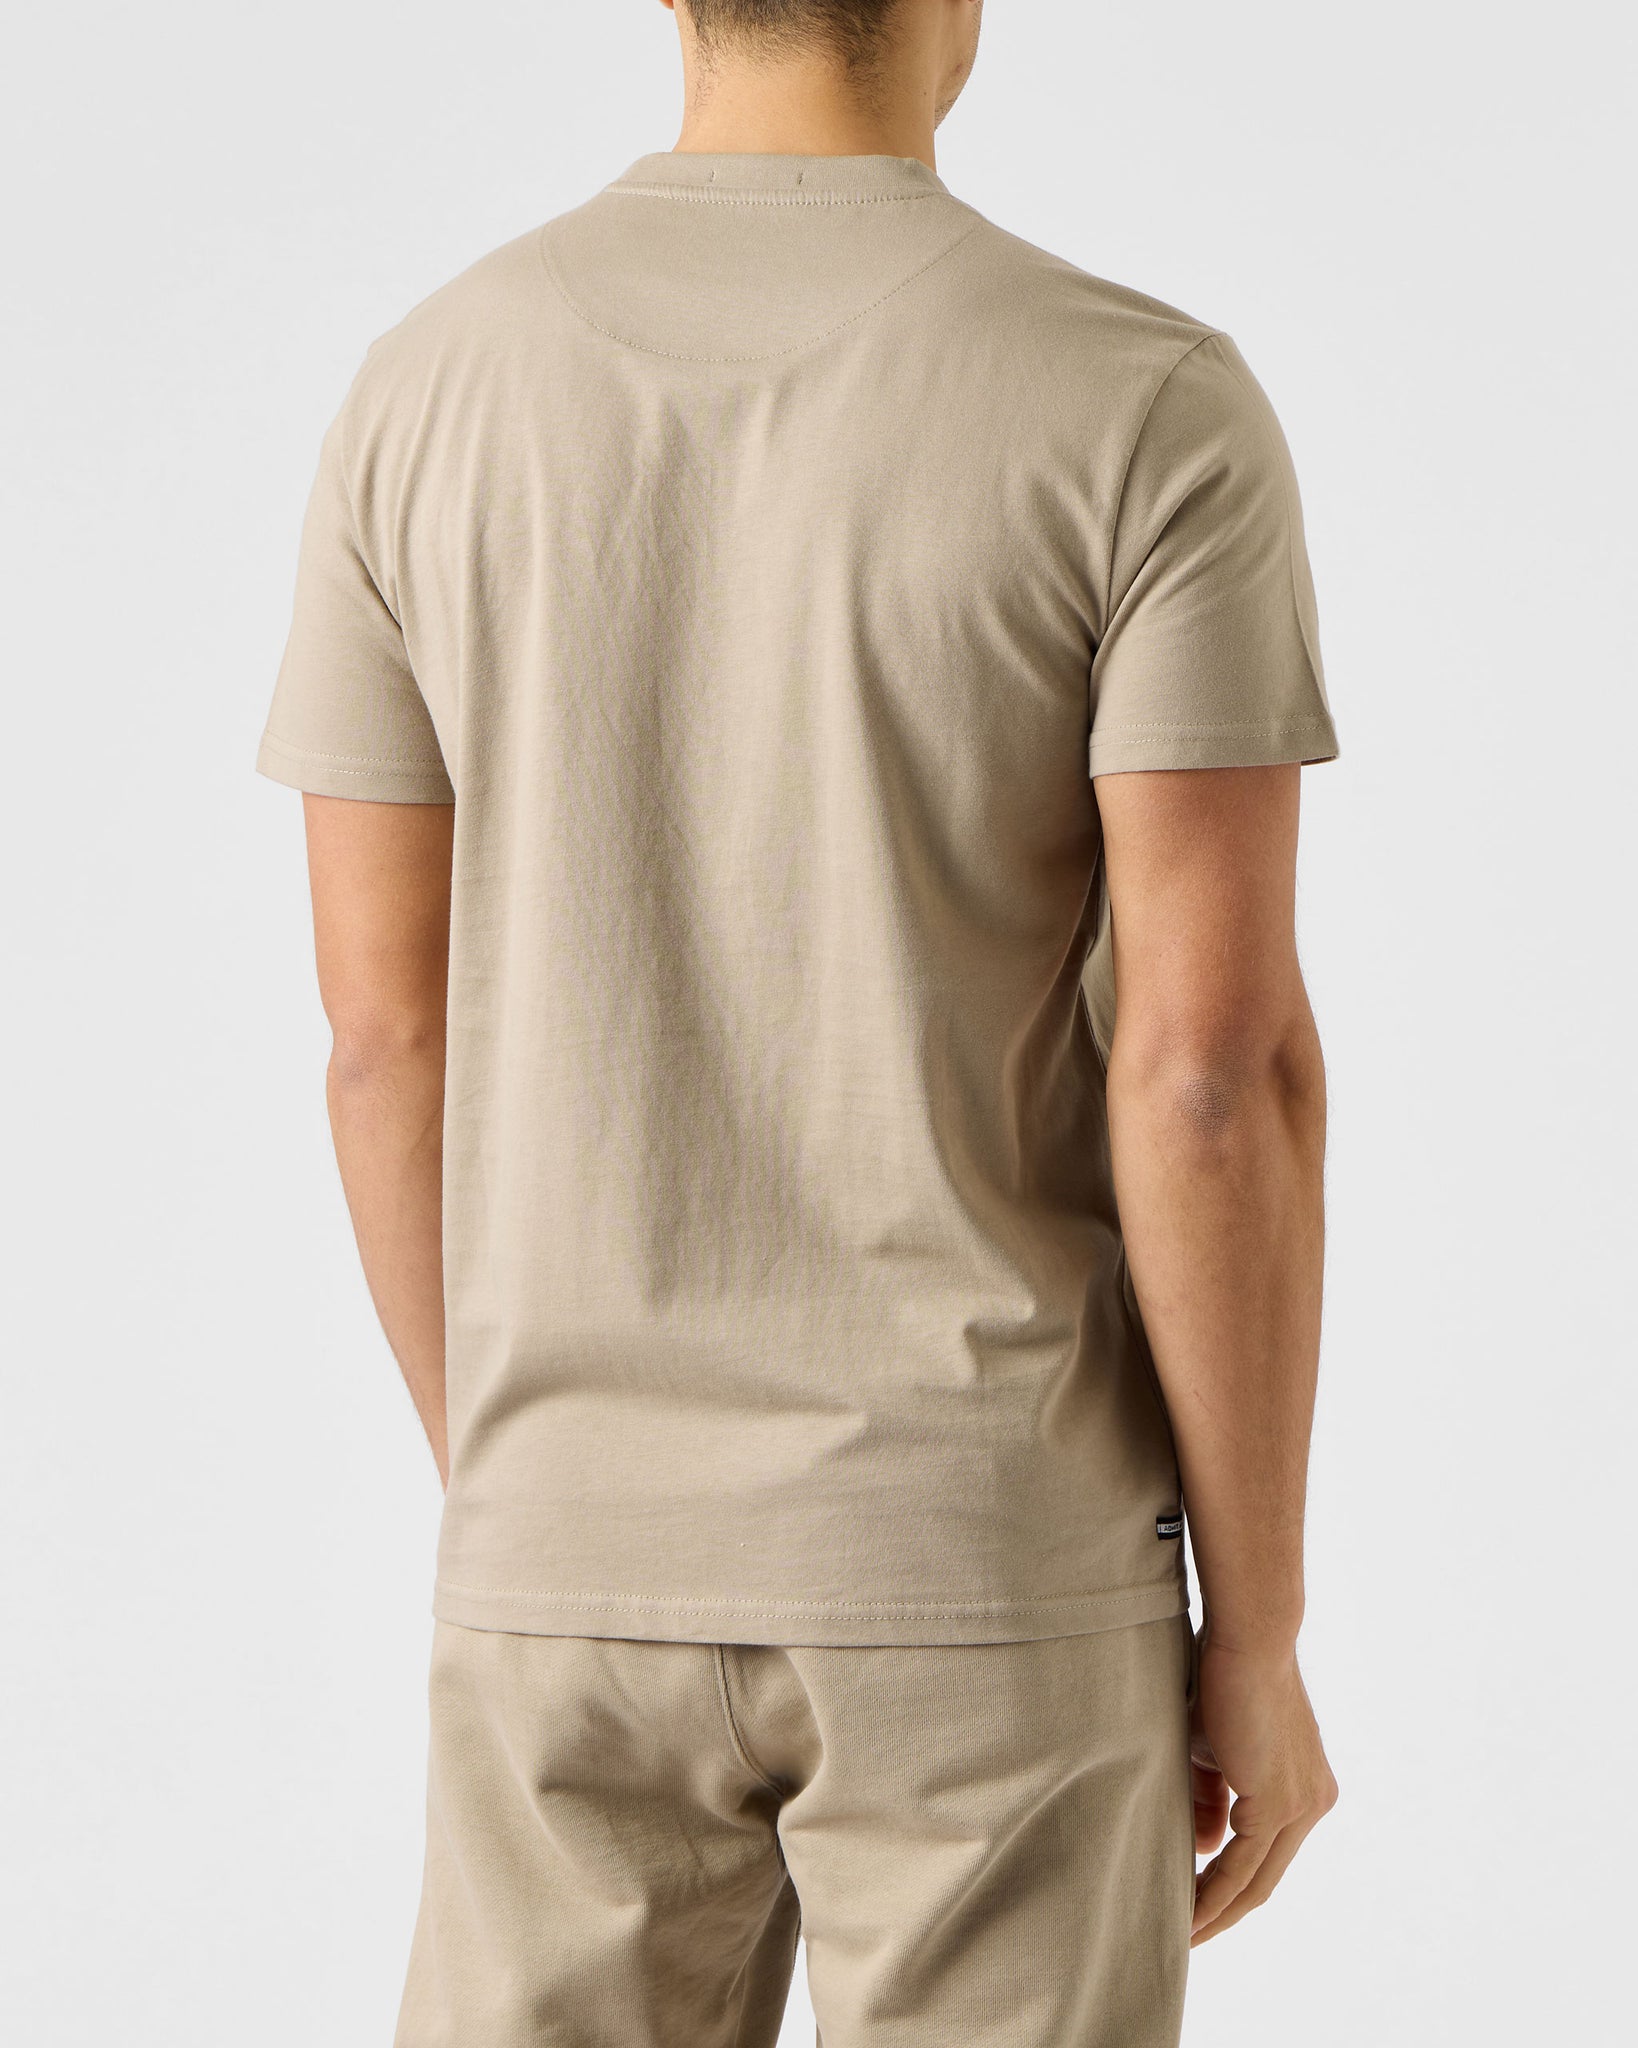 Gorman Pocket T-Shirt Bark